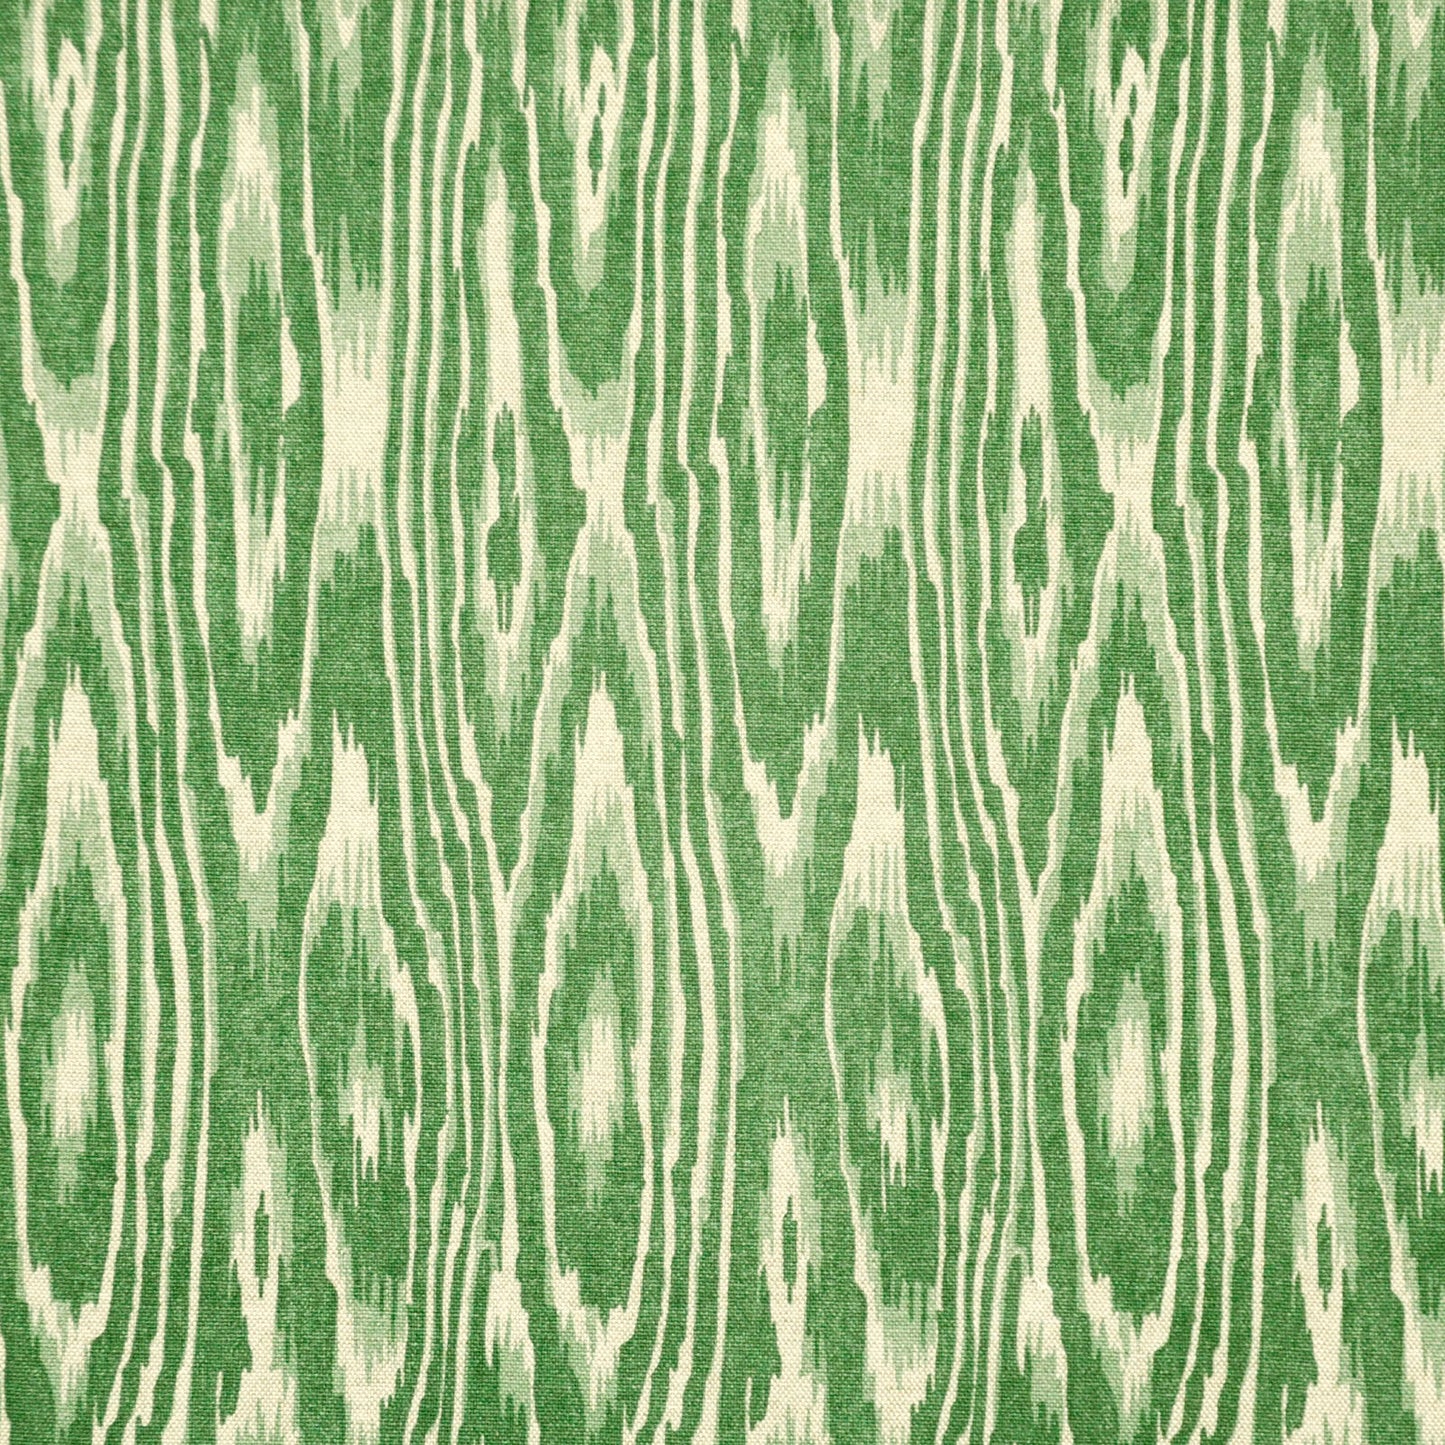 Purchase Maxwell Fabric - Bosco, # 520 Evergreen